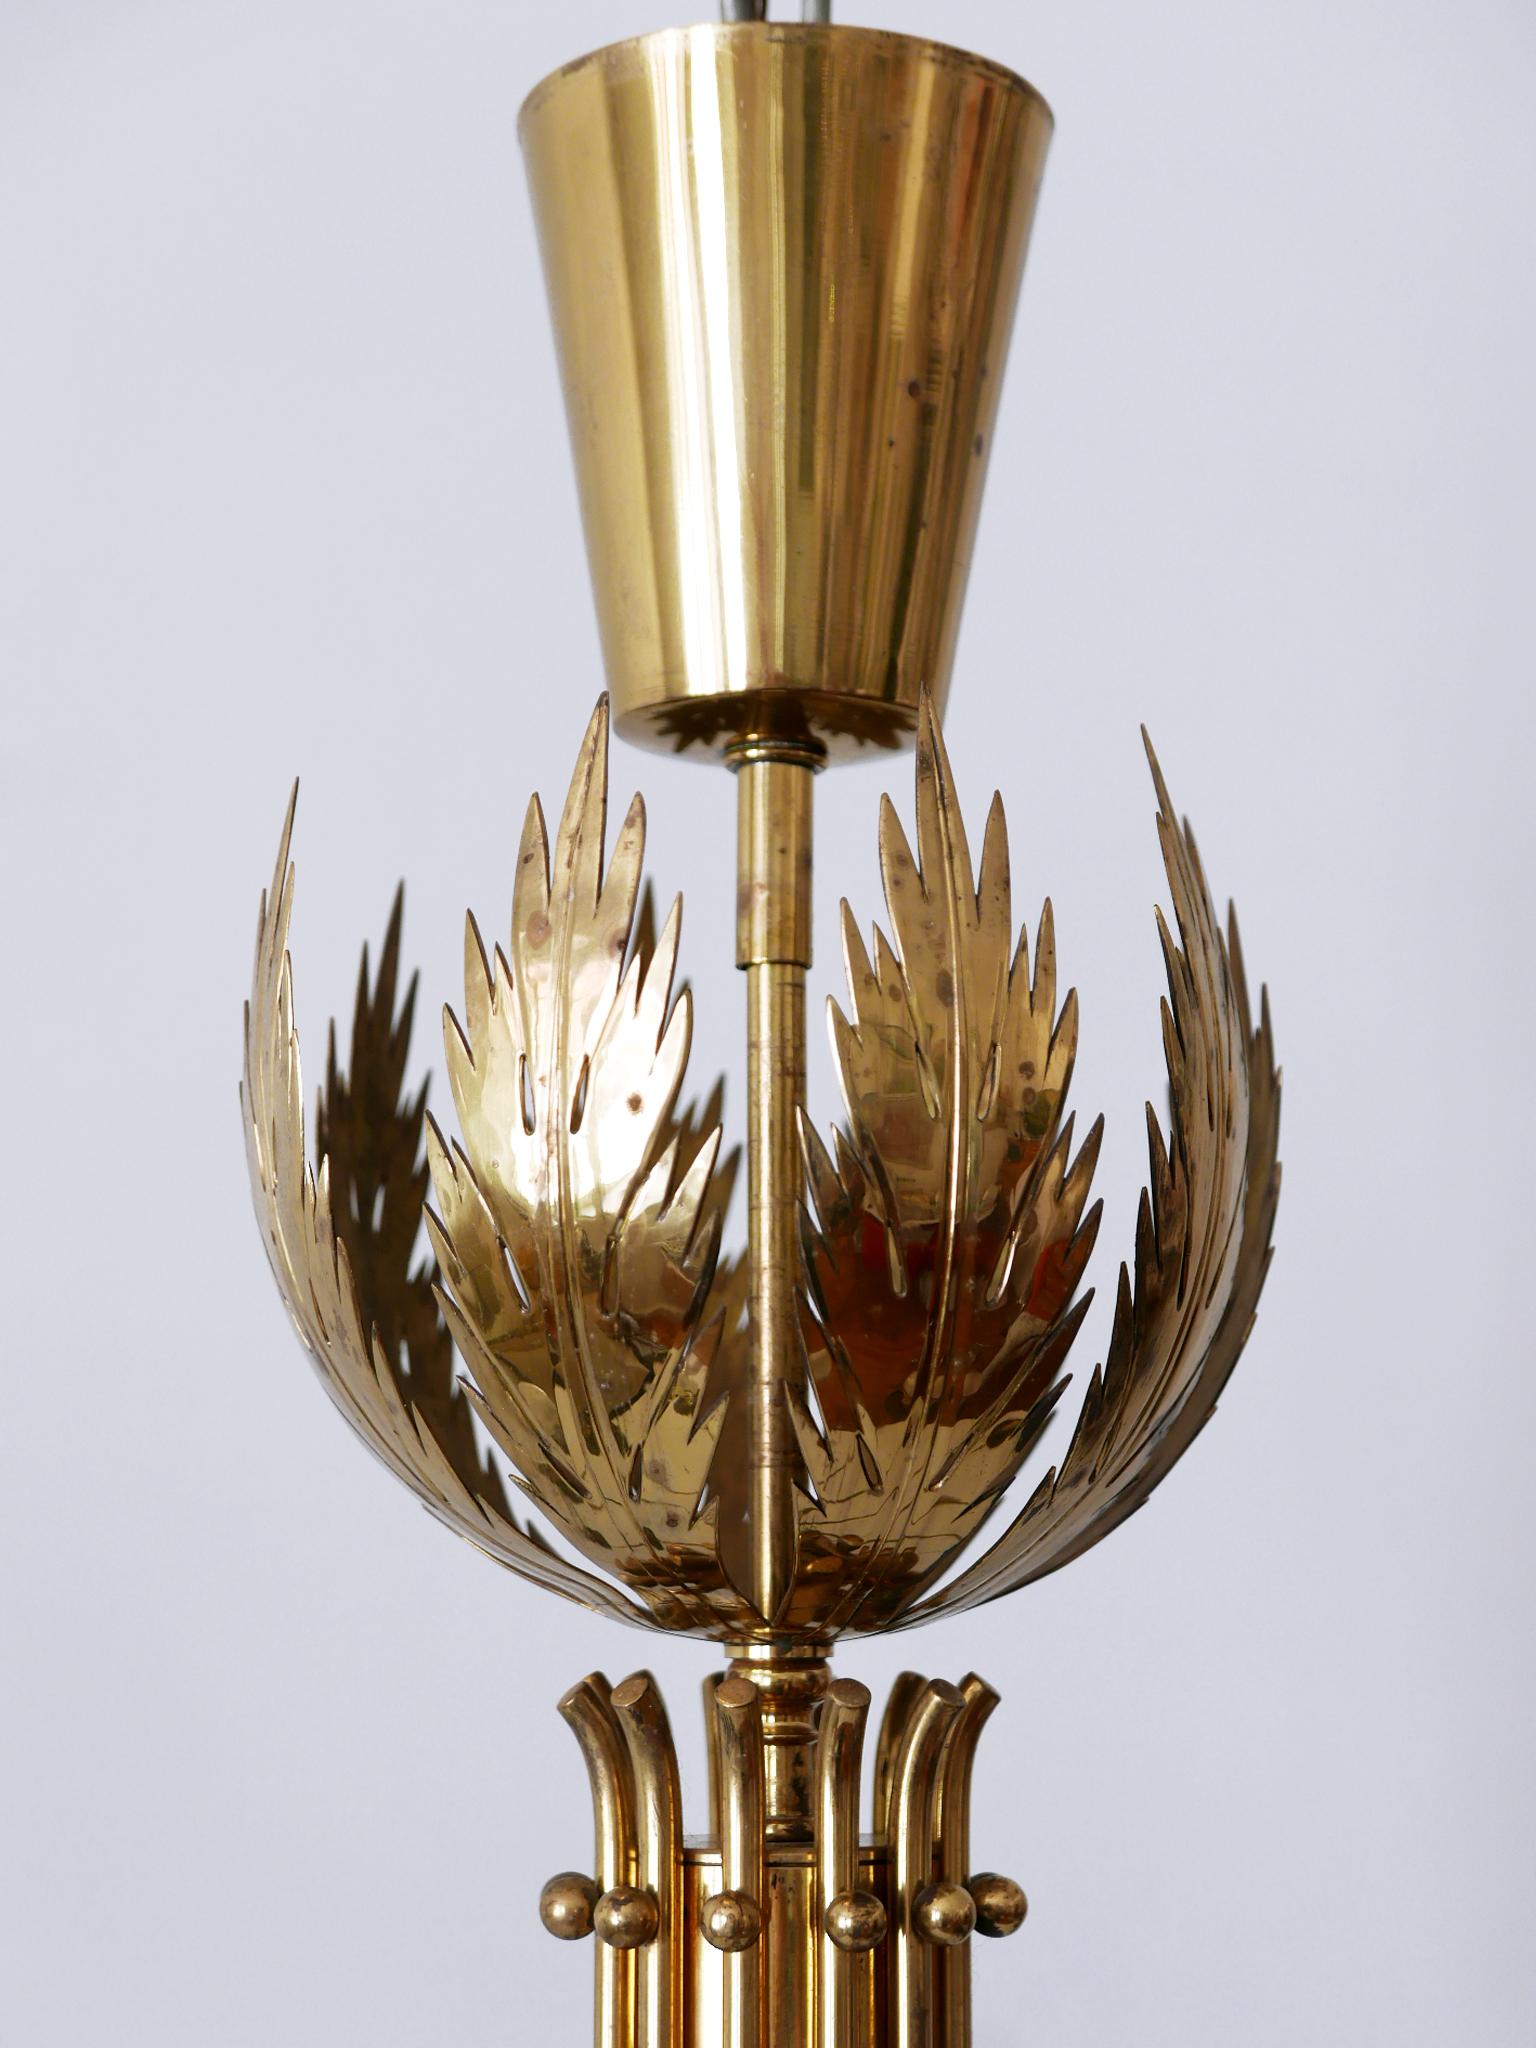 Rare 12-Armed Brass Chandeliers or Pendant Lamps by Vereinigte Werkstätten 1950s For Sale 11